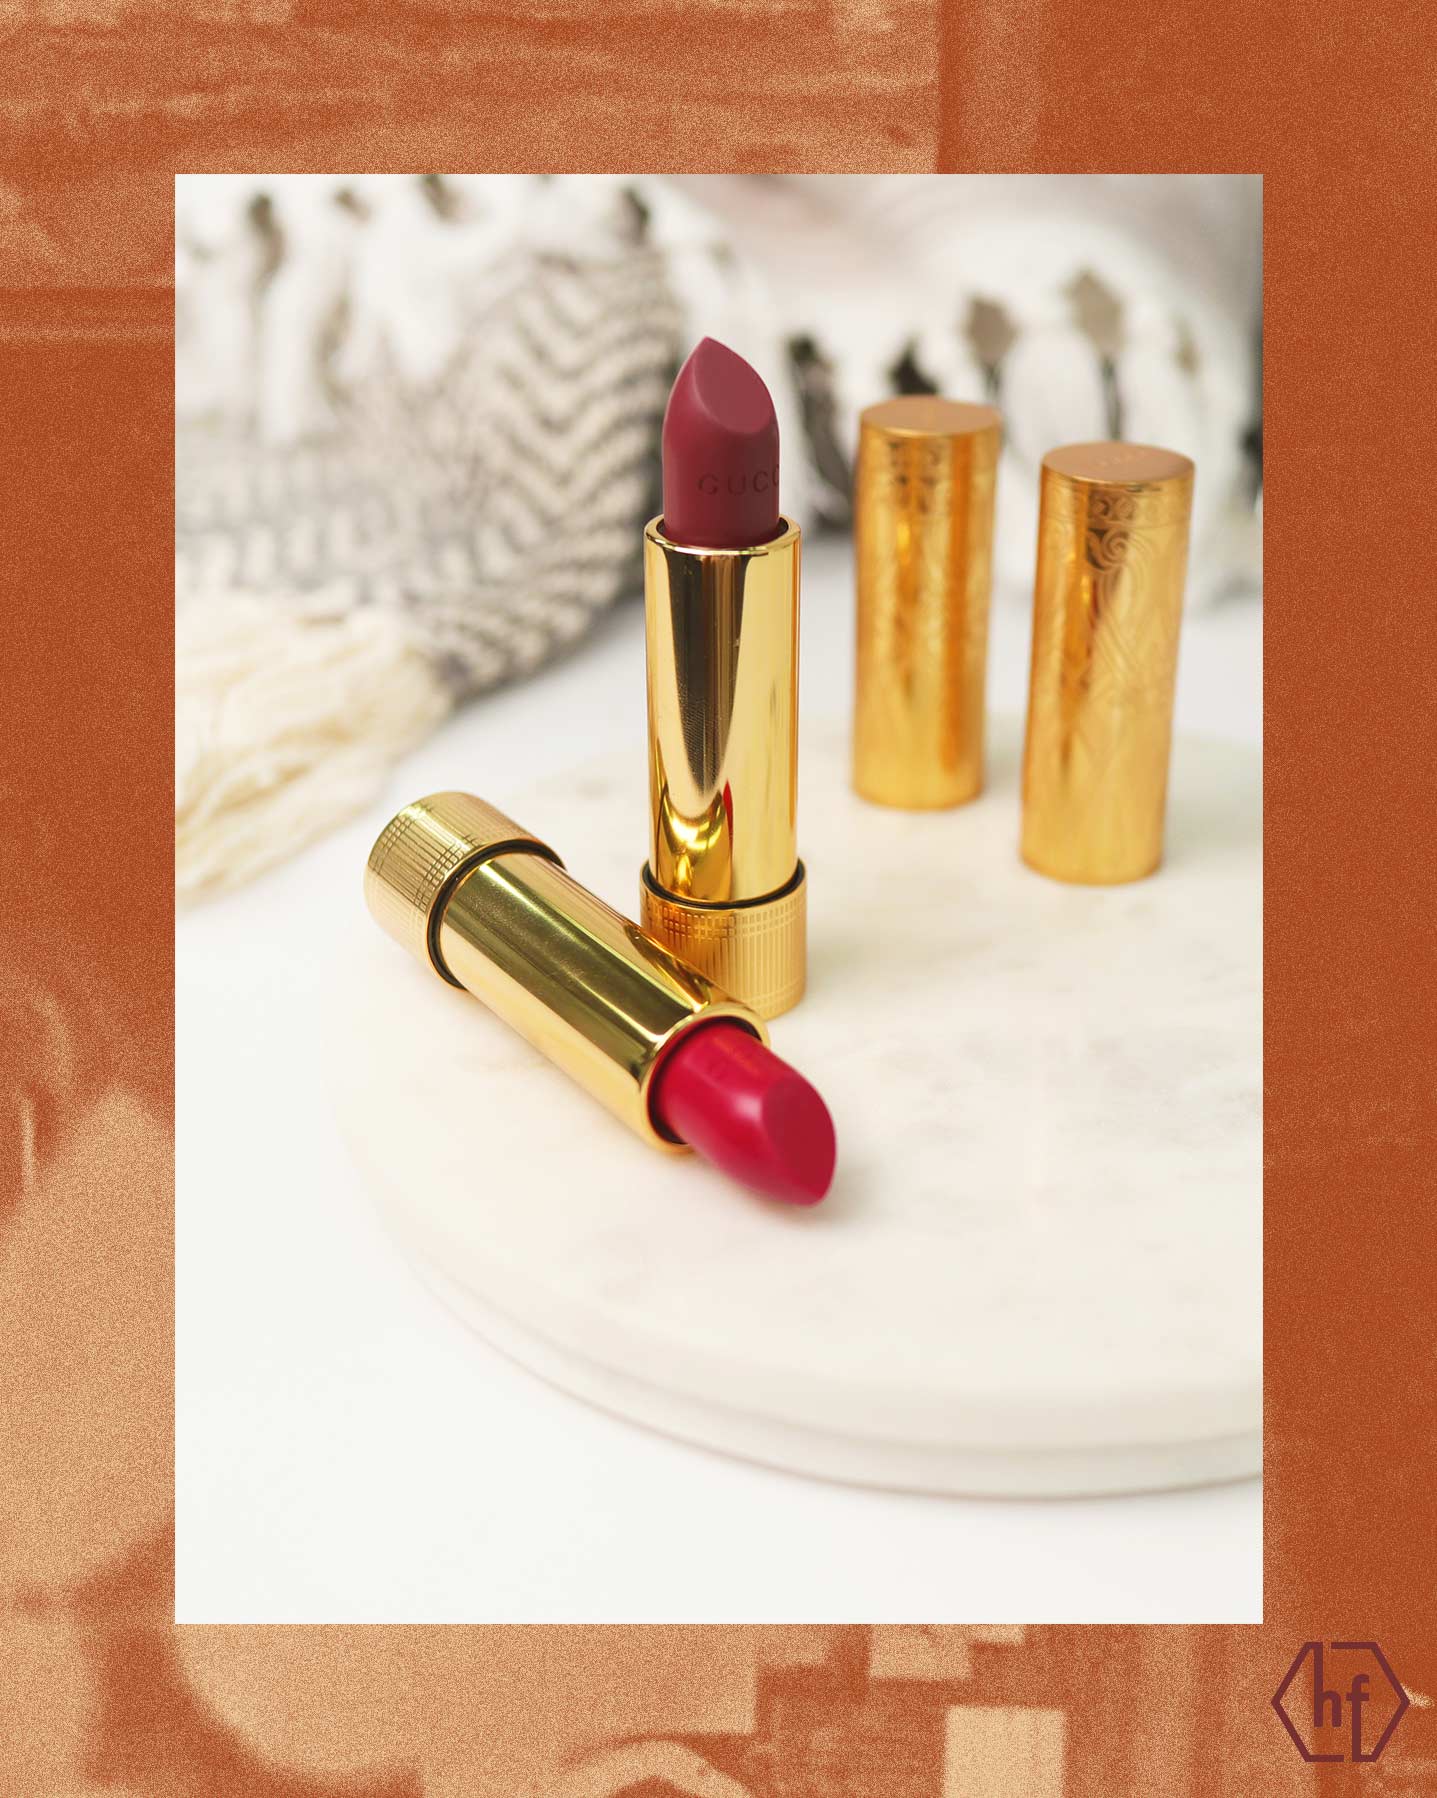 gucci-beauty-restage-58-shades-lipstick-11